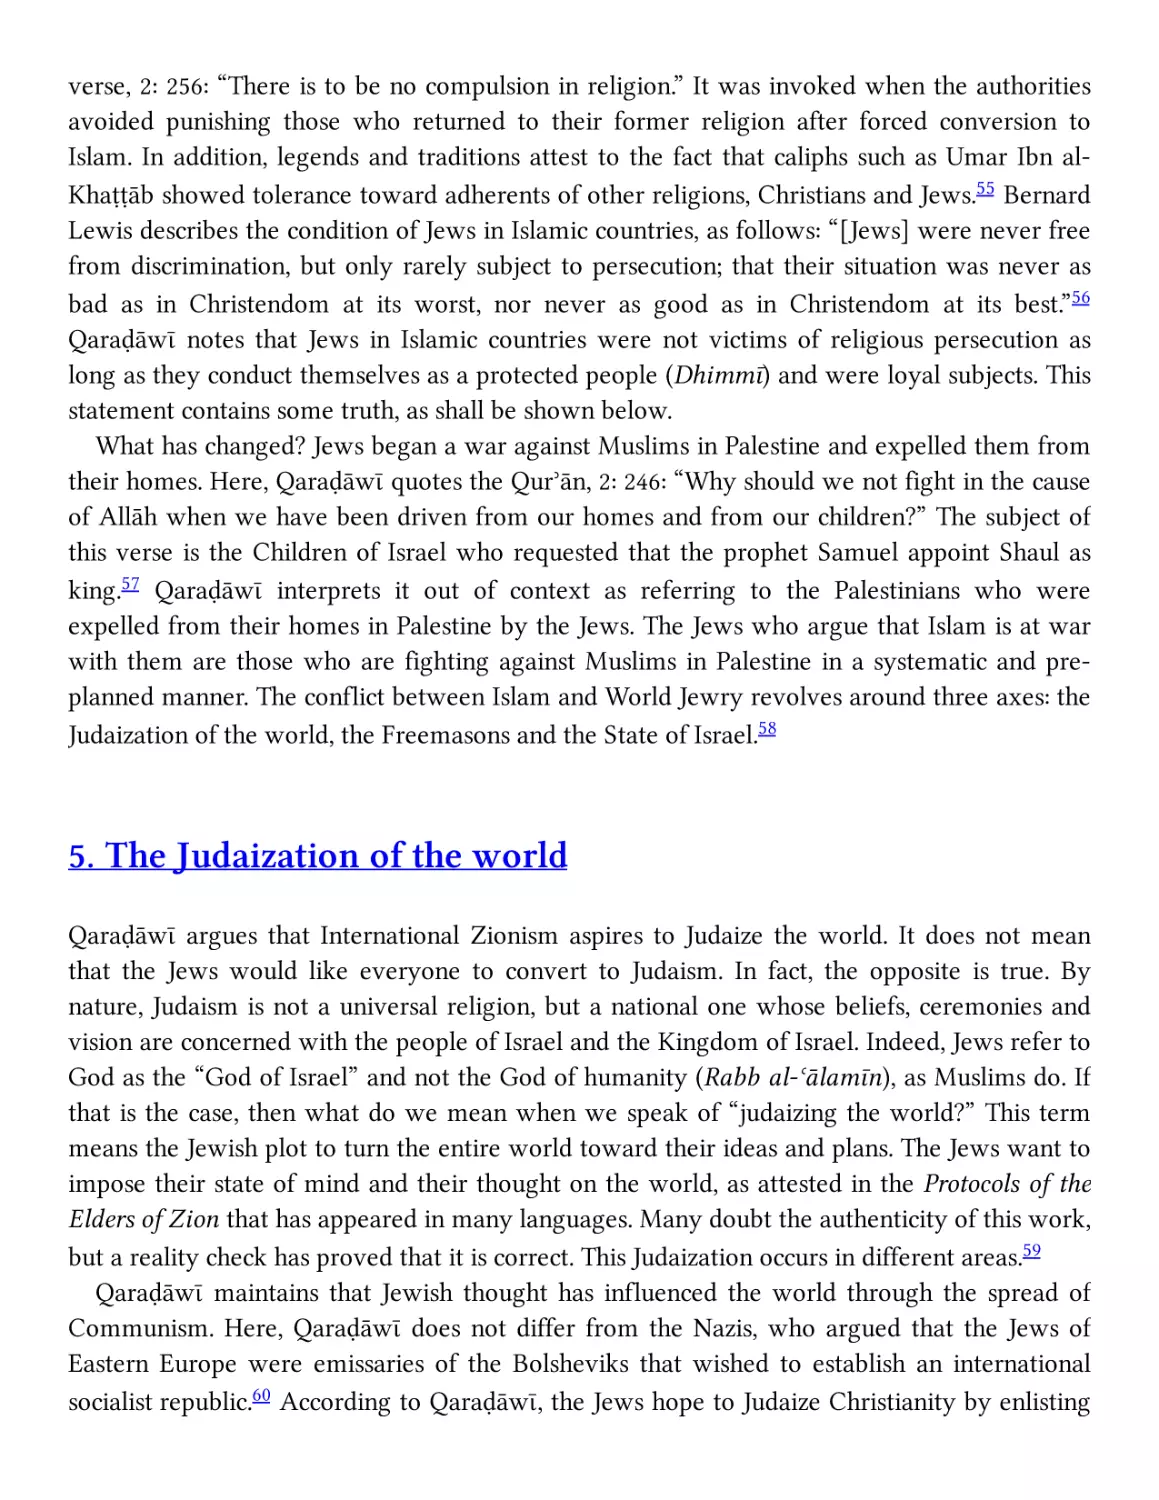 5. The Judaization of the world